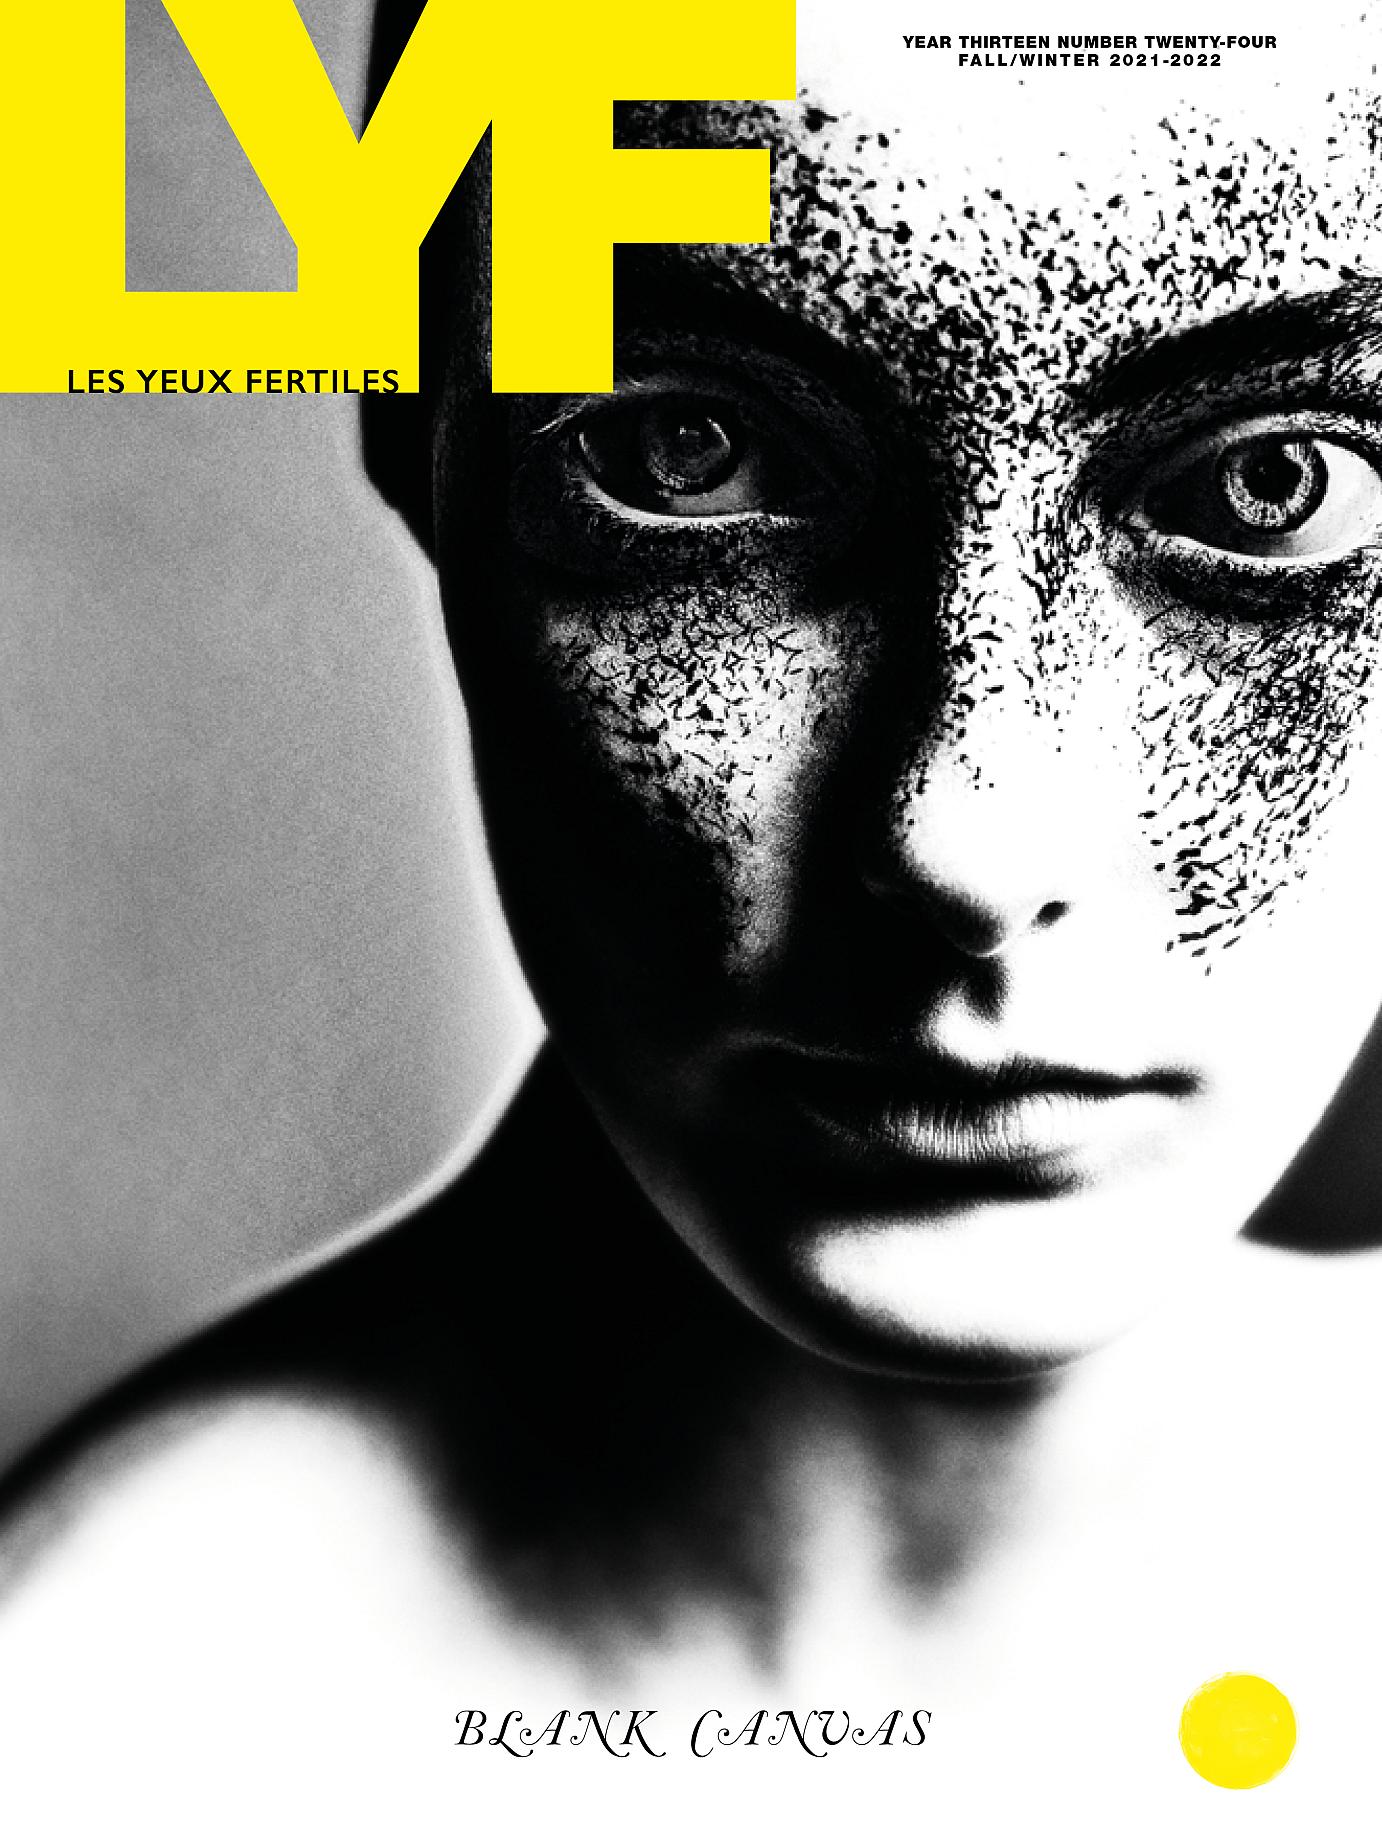 Lyf-Magazine-Blank-Canvas